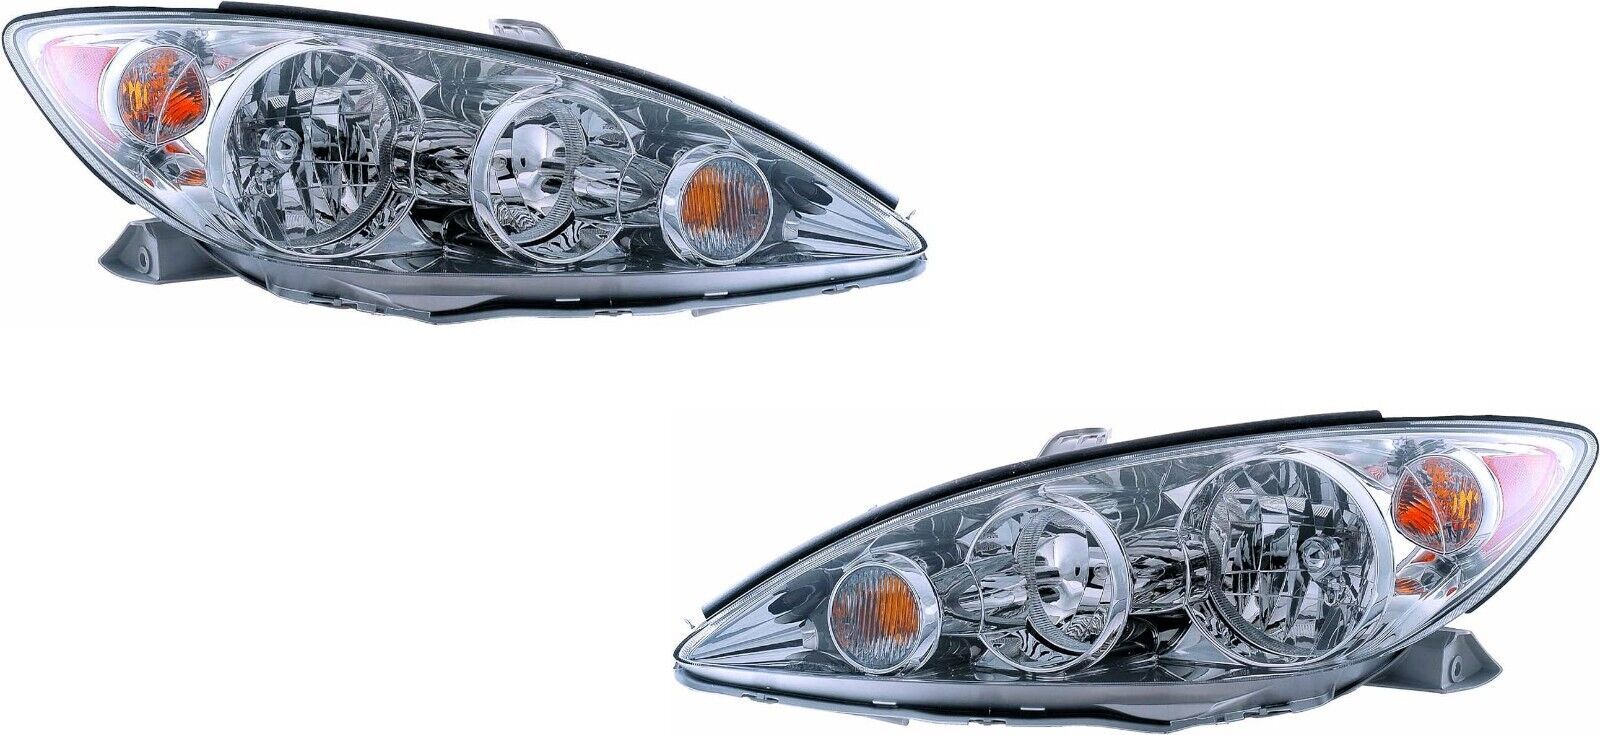 Headlights For Toyota Camry 2005 2006 Left Right Pair Chrome Trim USA Built - $168.26